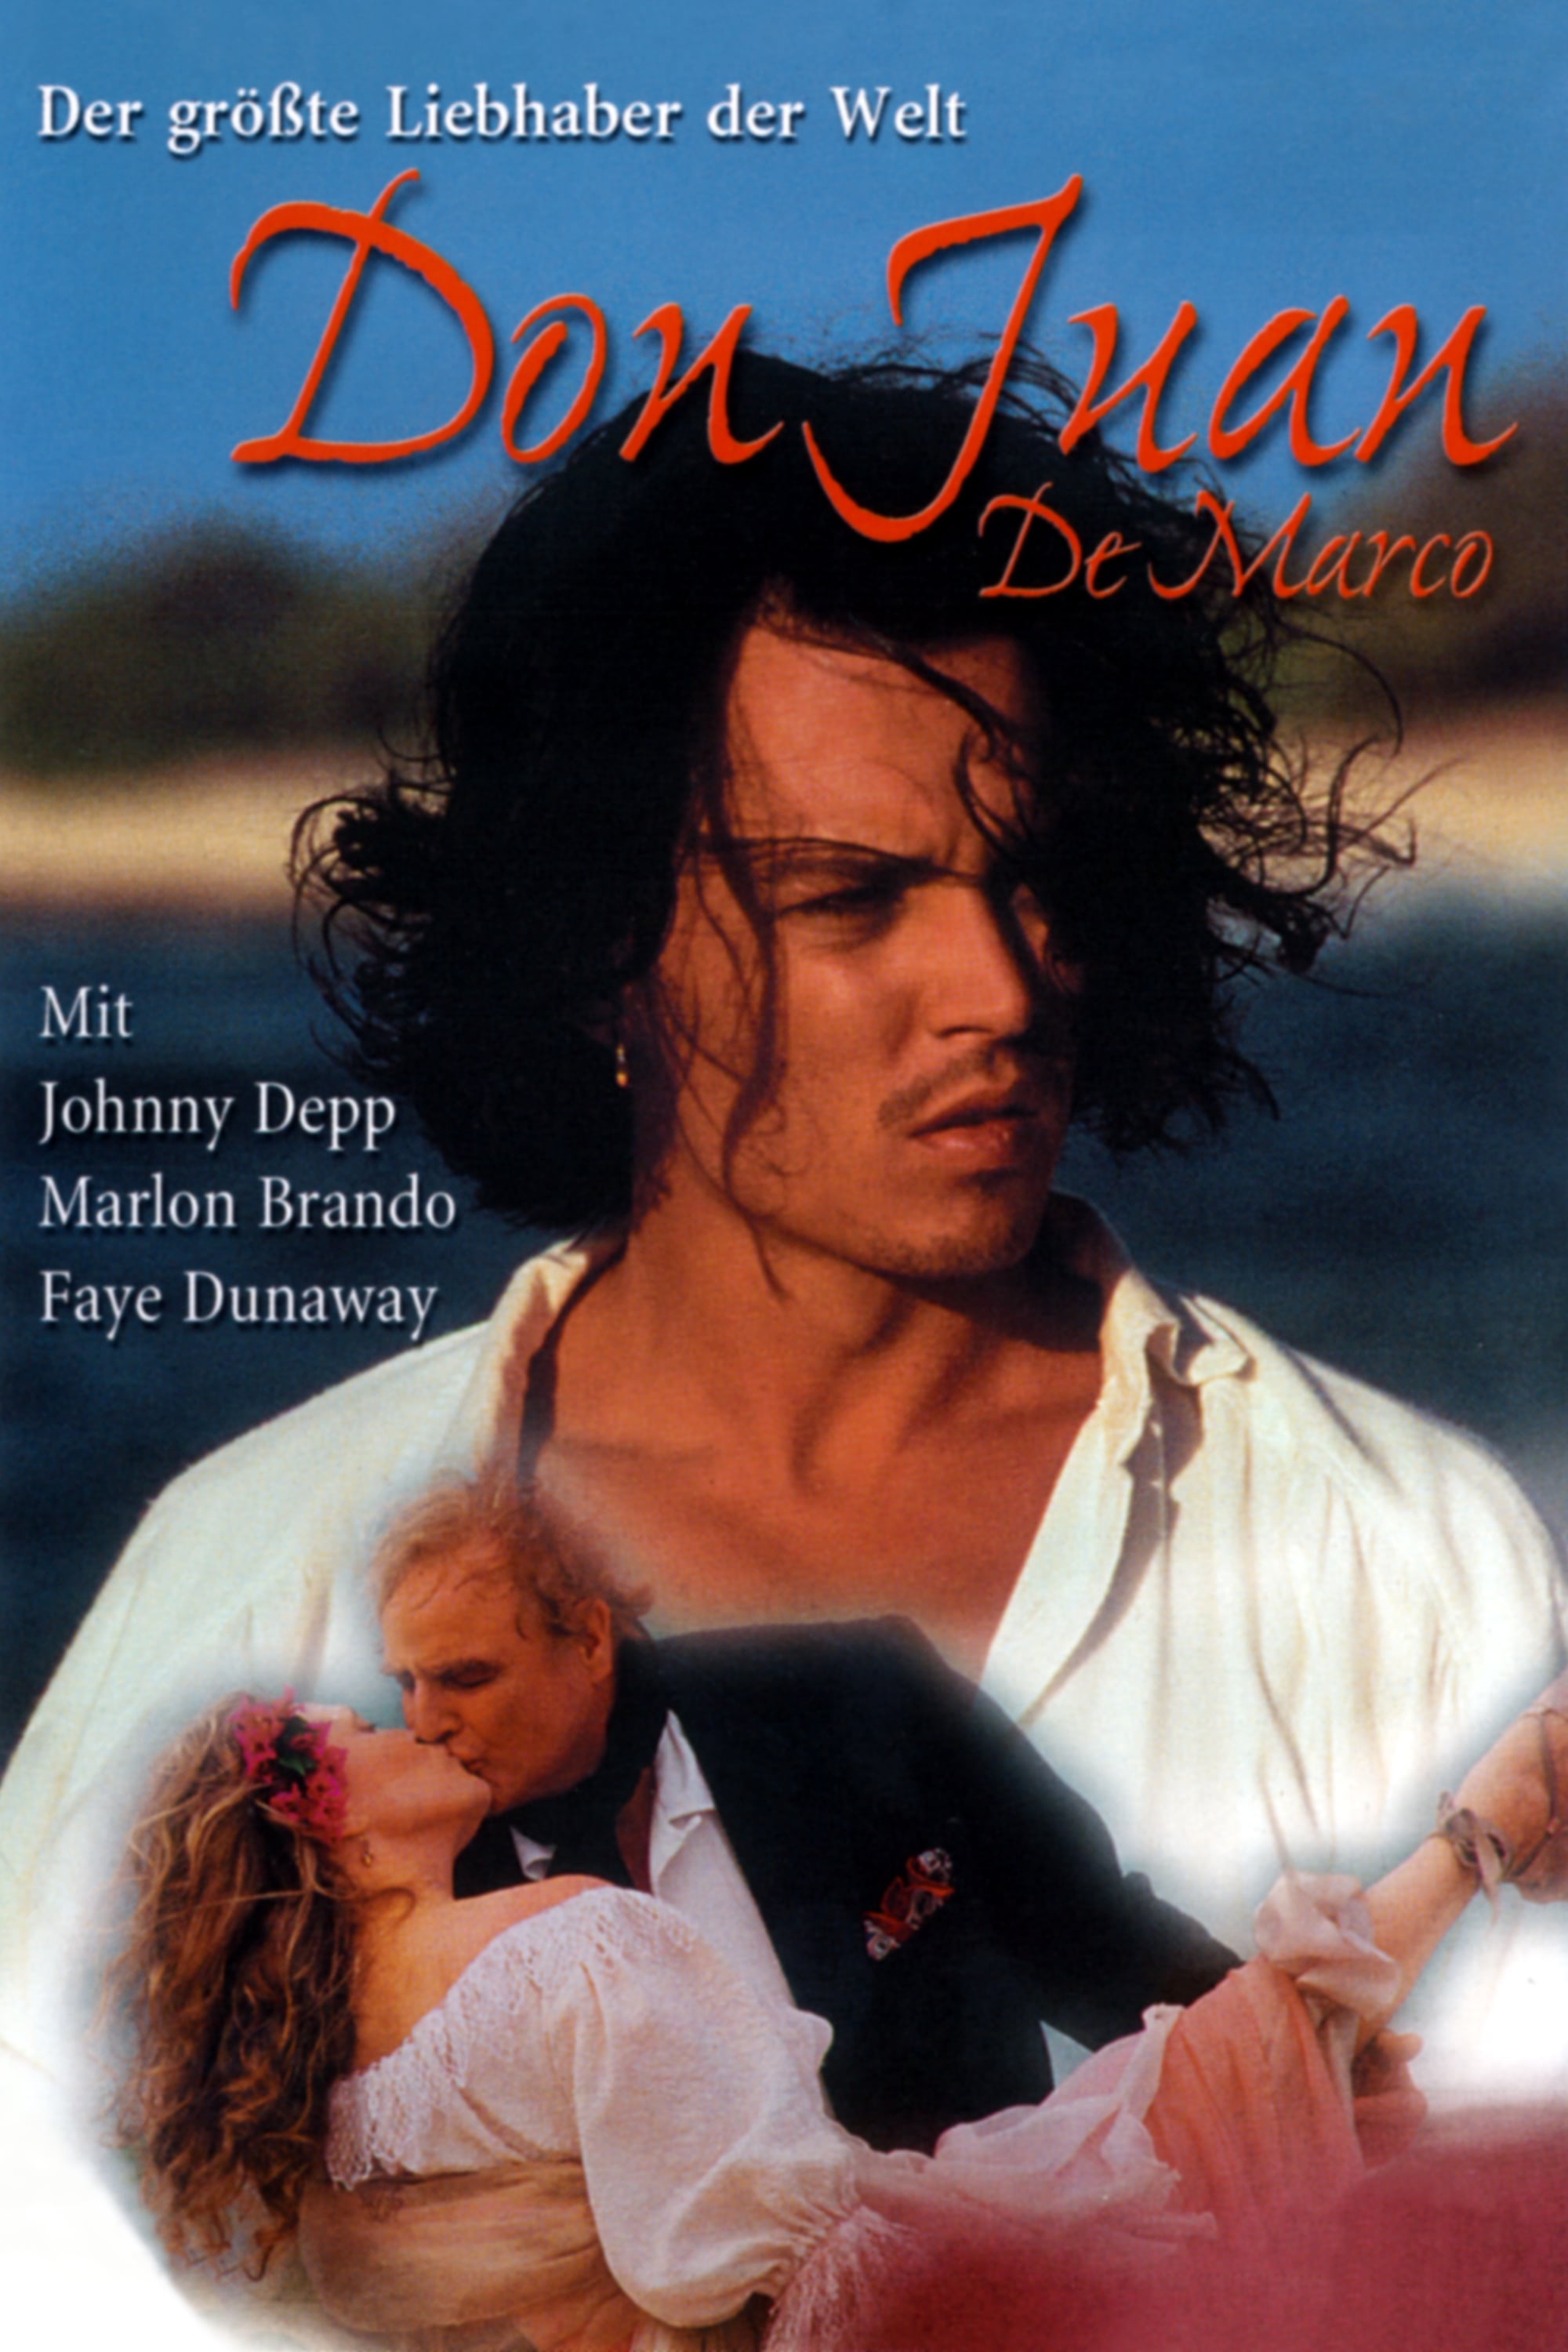 Plakat von "Don Juan DeMarco"